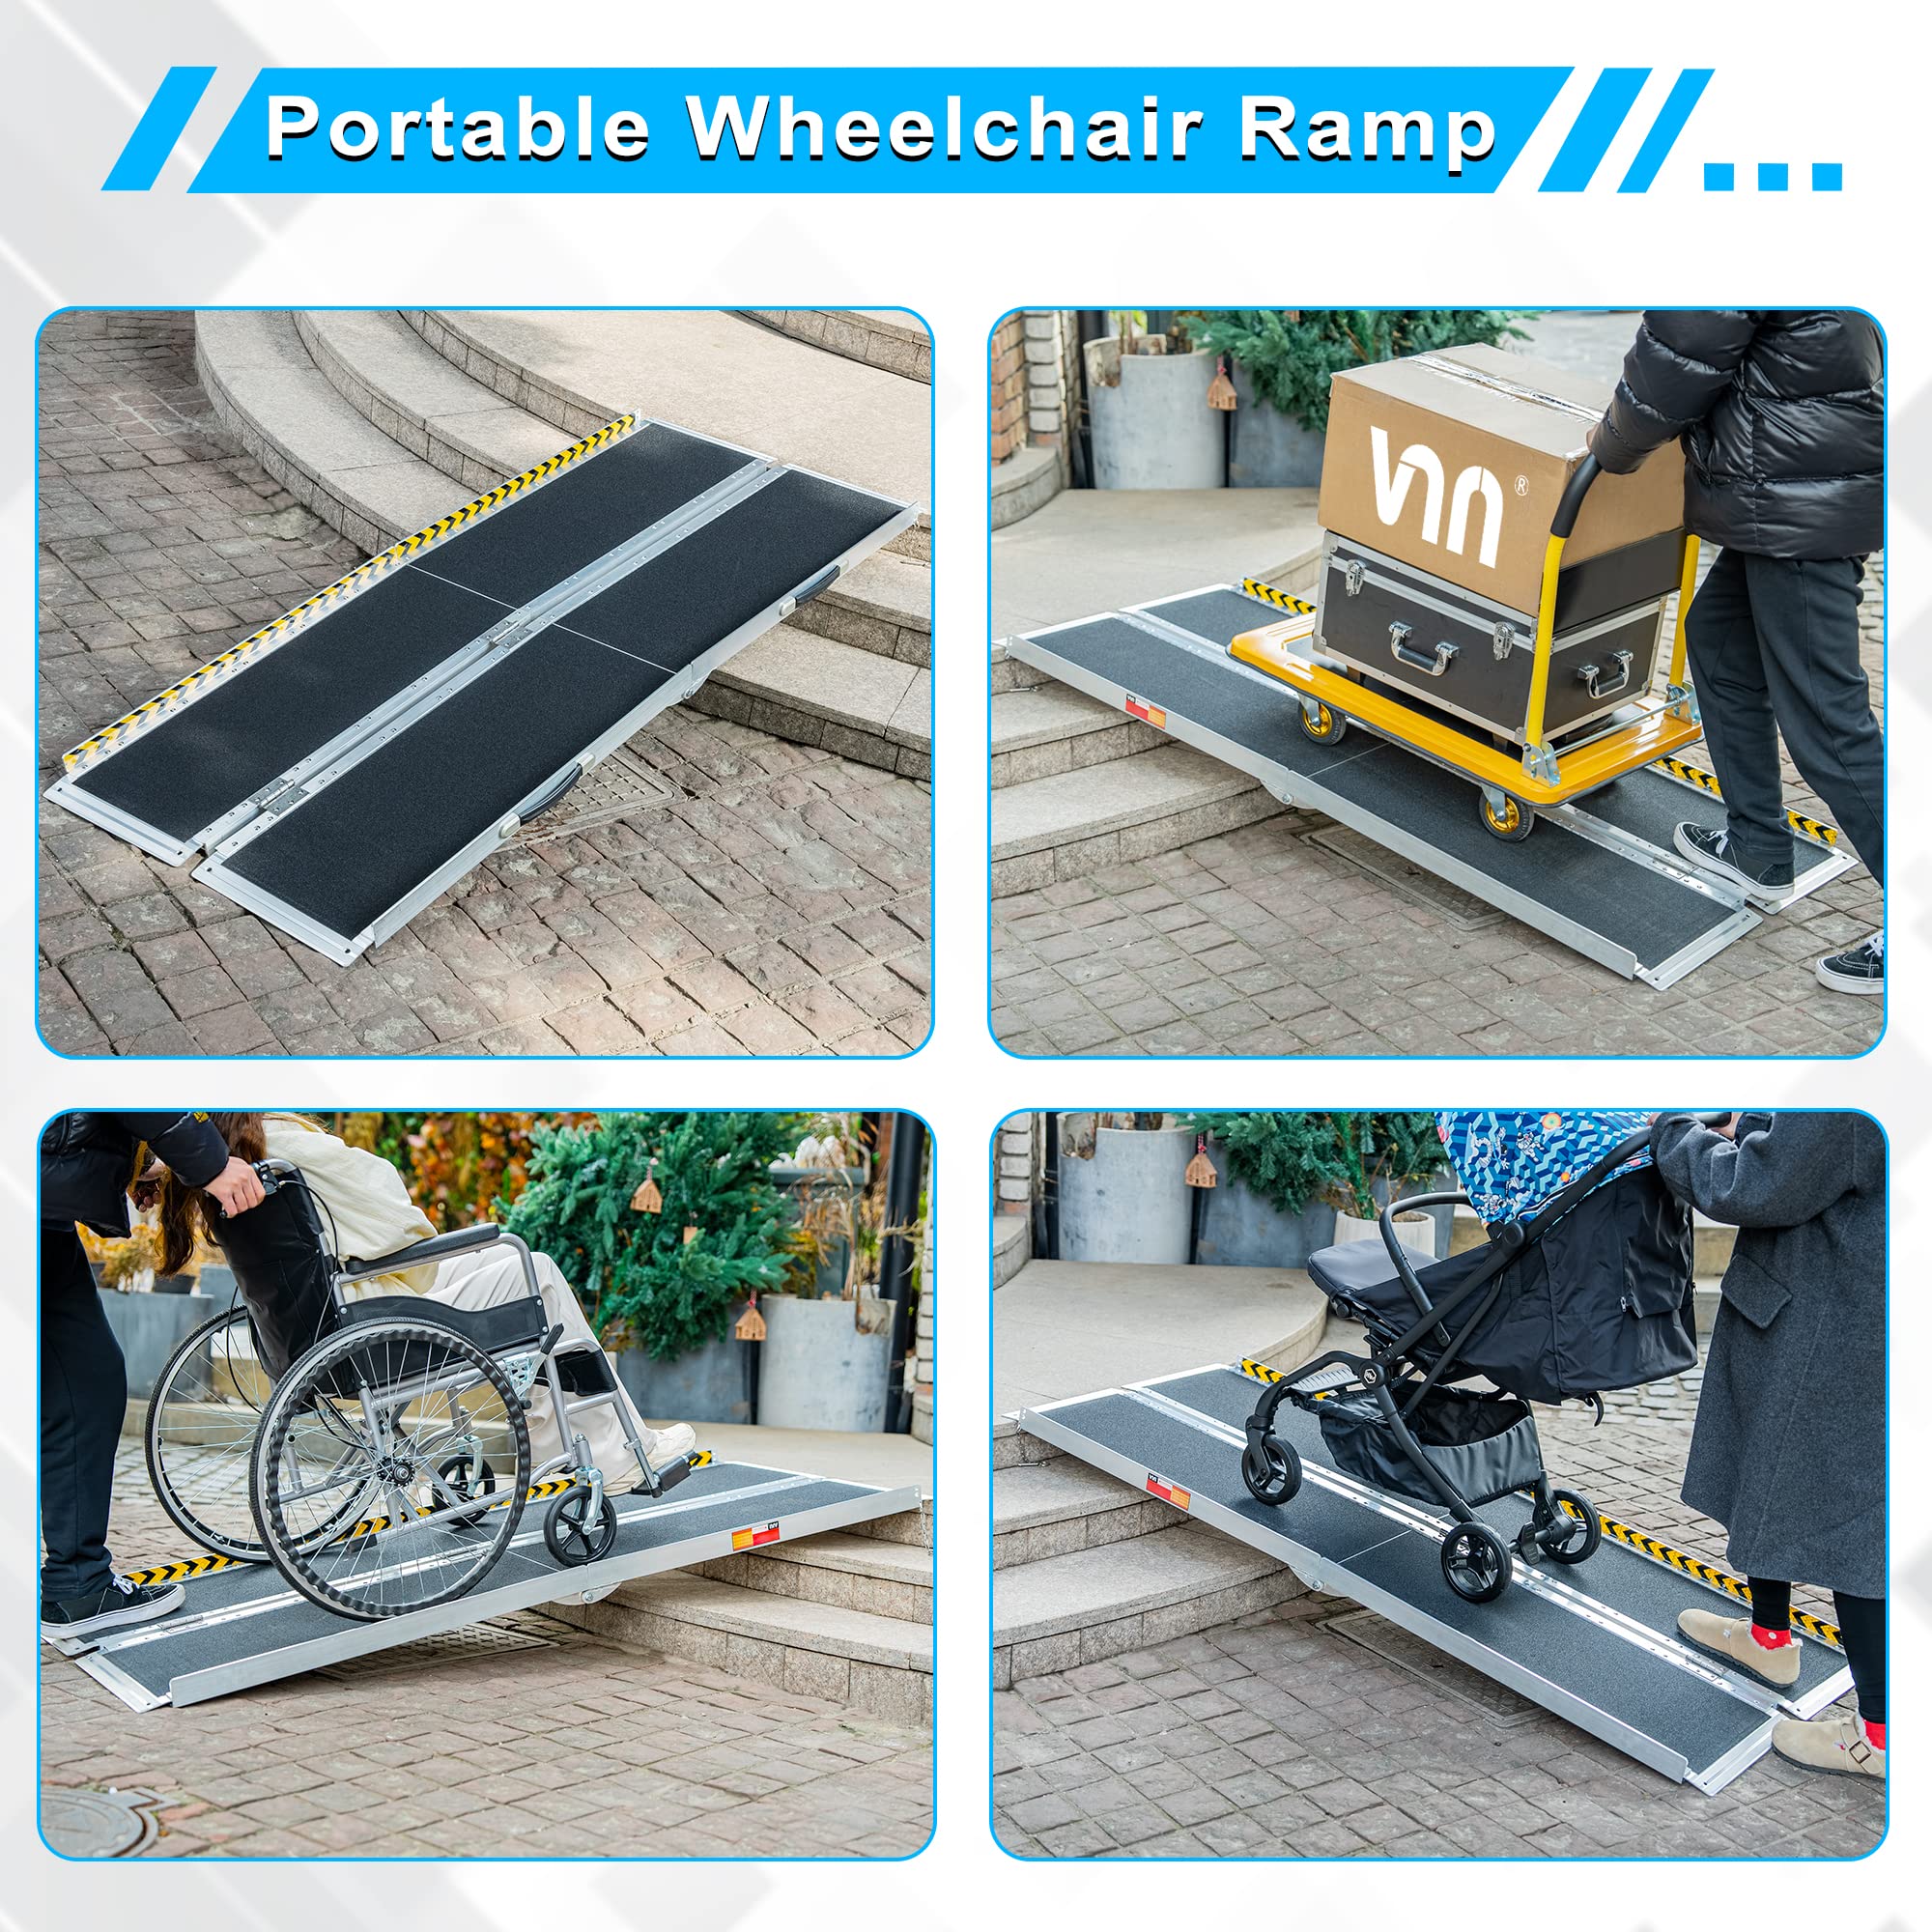 VNN Portable Wheelchair Ramp 6FT, Non-Slip Aluminum Folding Handicap Ramp, Door Threshold Wheelchair Ramps for Home, Wheel Chair Ramp for Home Steps, Scooter Ramp for Car, Doorways, Curbs, Stairs